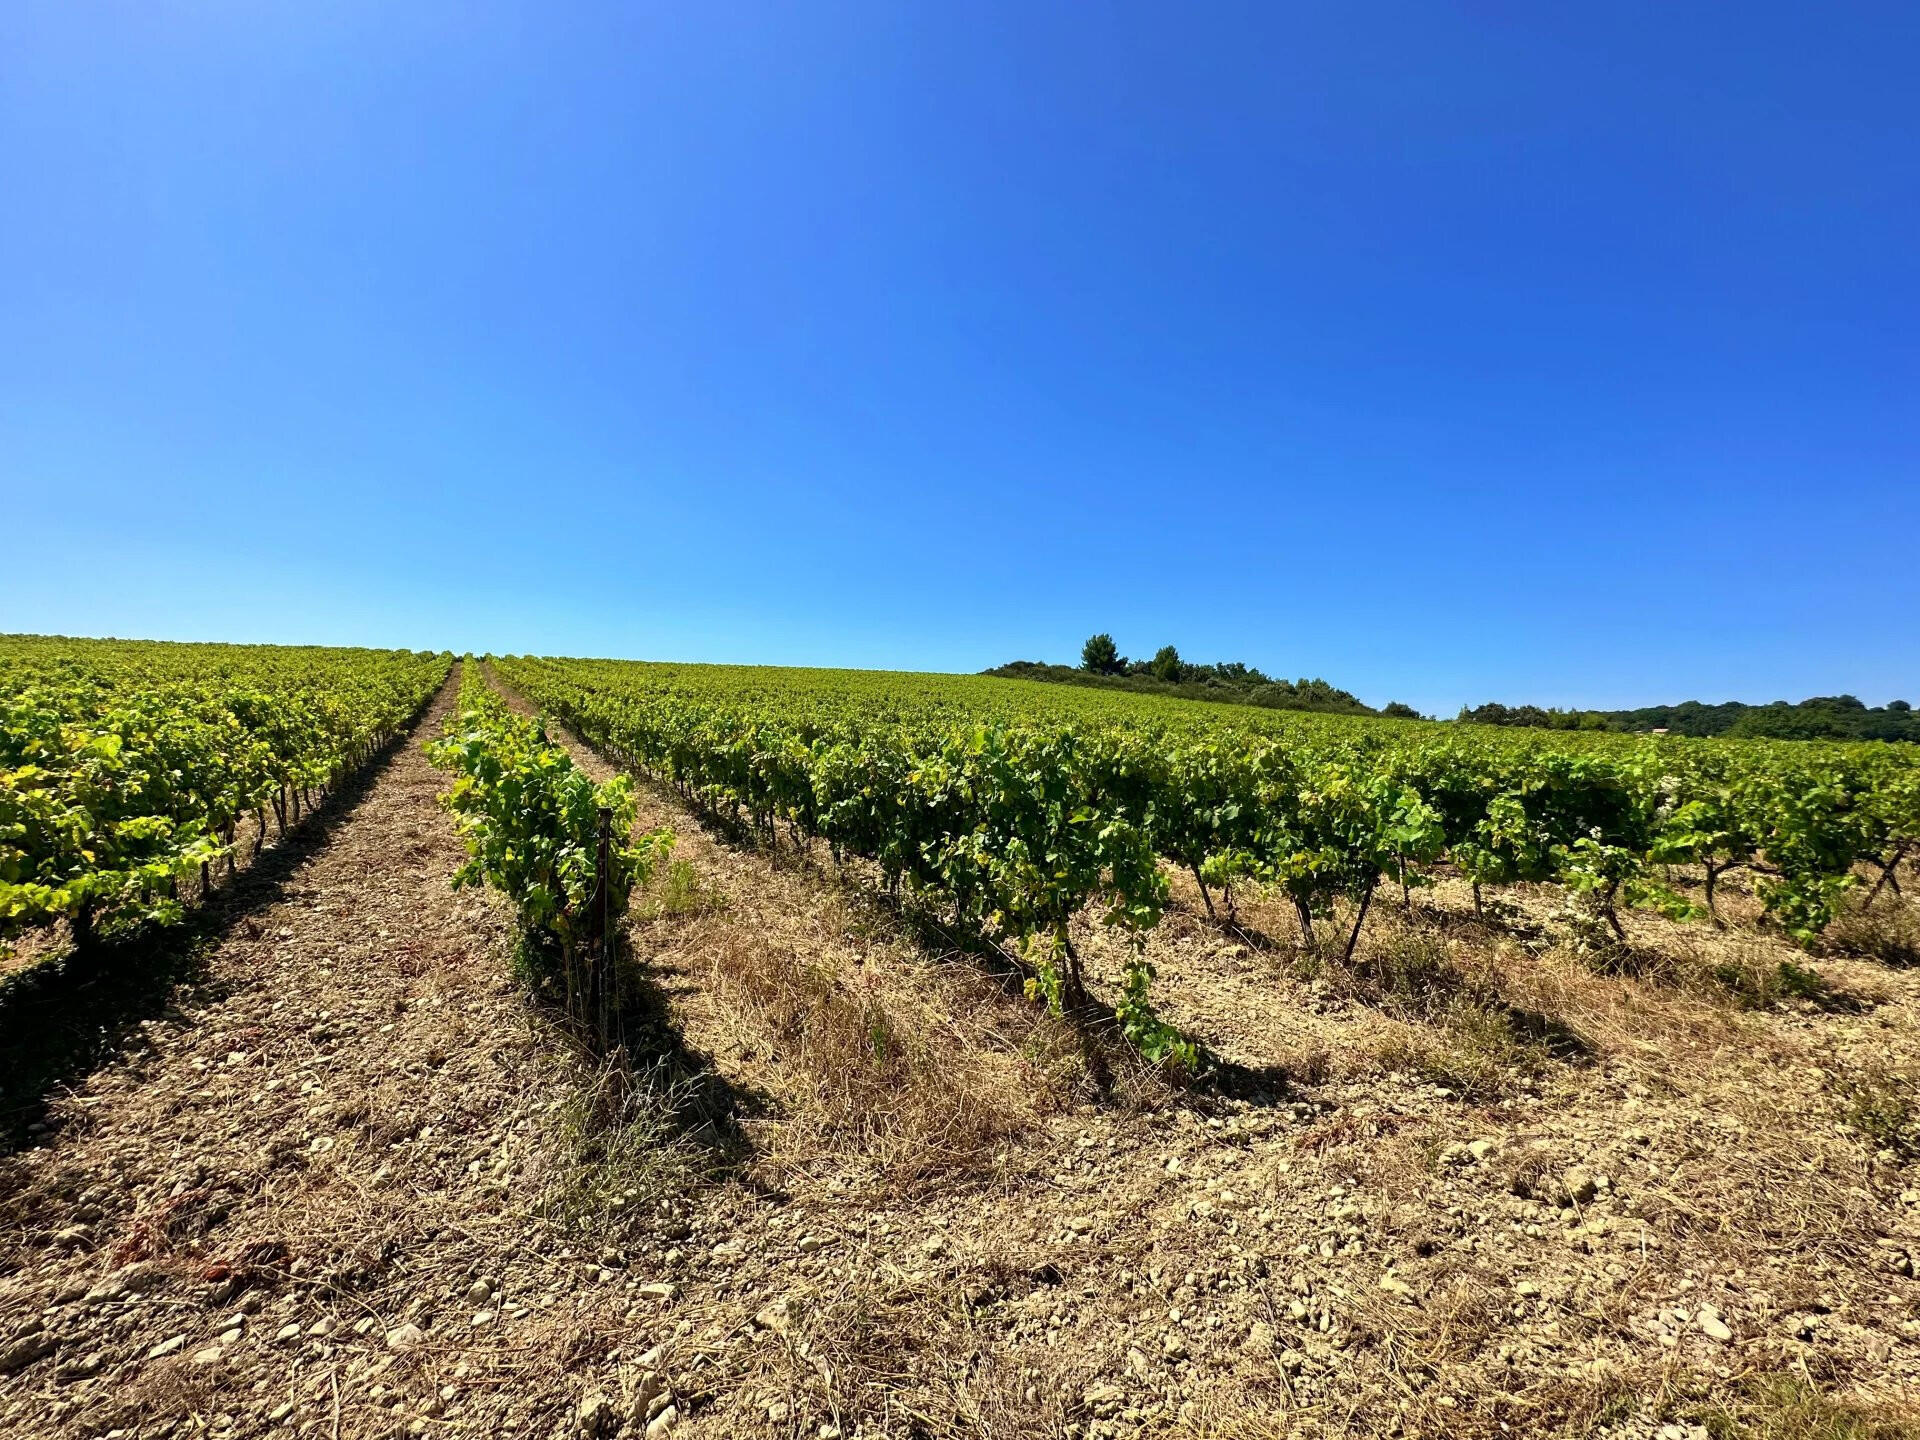 A vendre domaine viticole bio de 50 ha Vaucluse